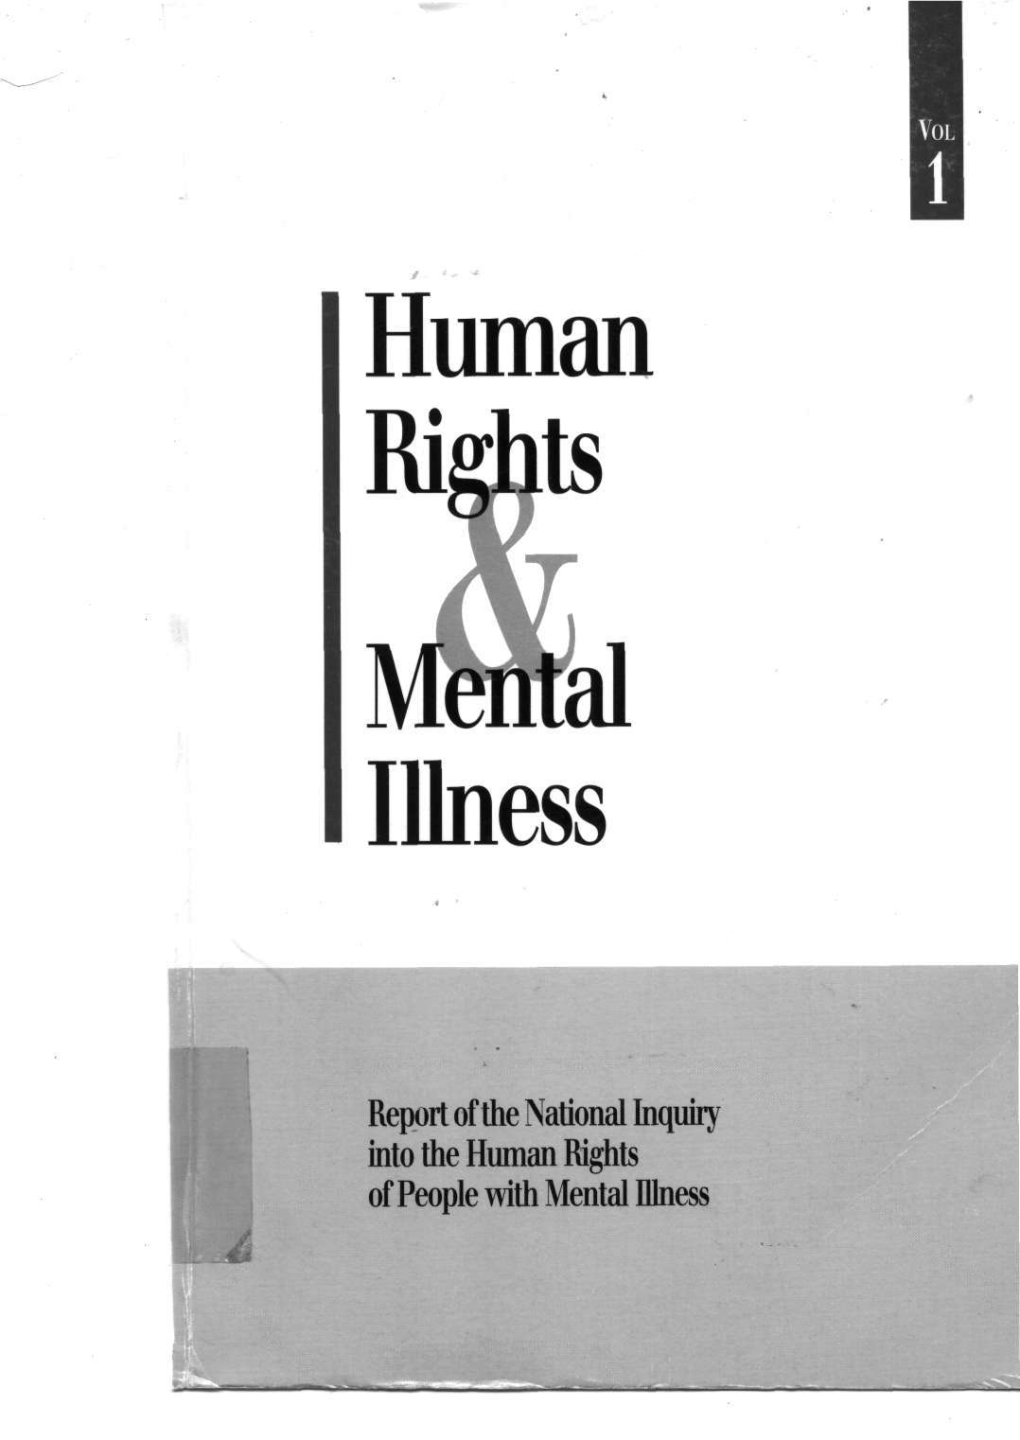 Human Rights and Mental Illness